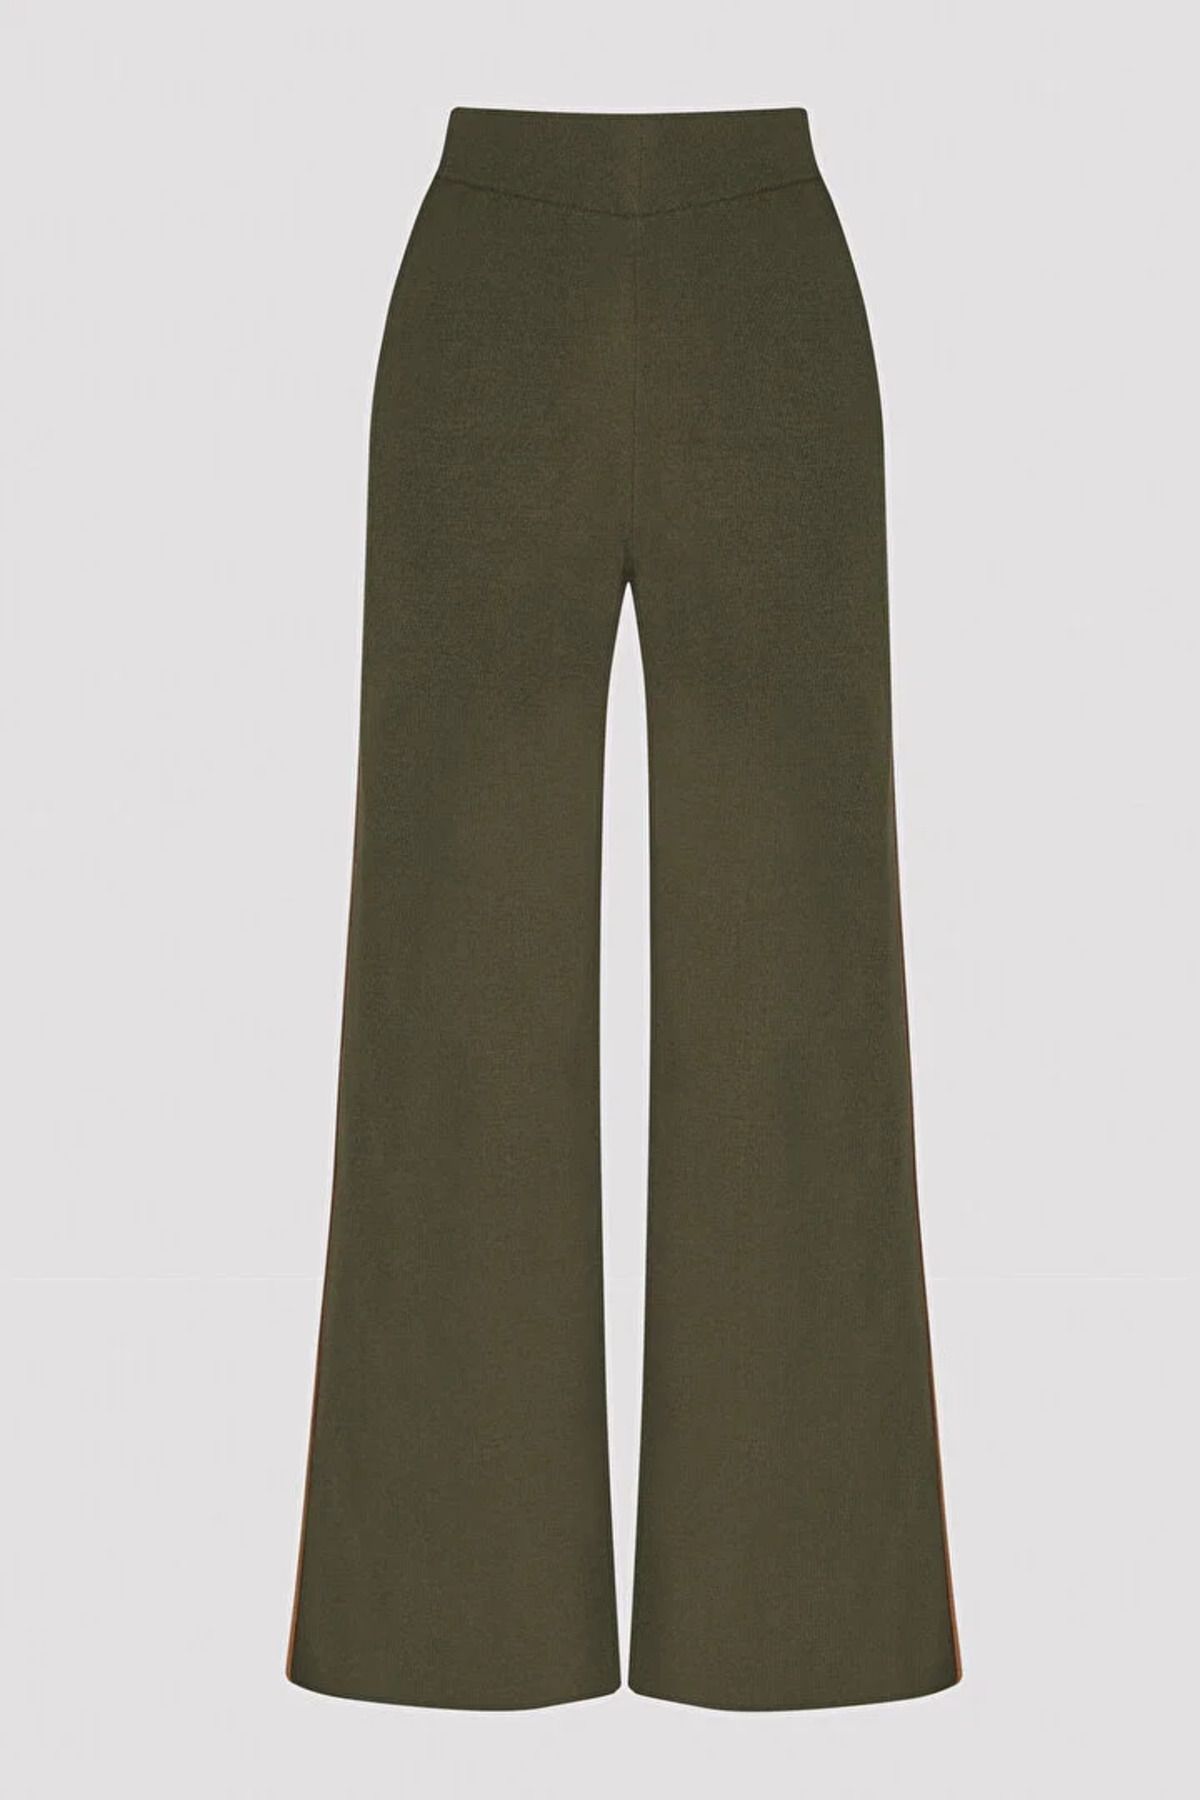 Penti Yeşil Yüksek Bel Piping Triko Pantolon